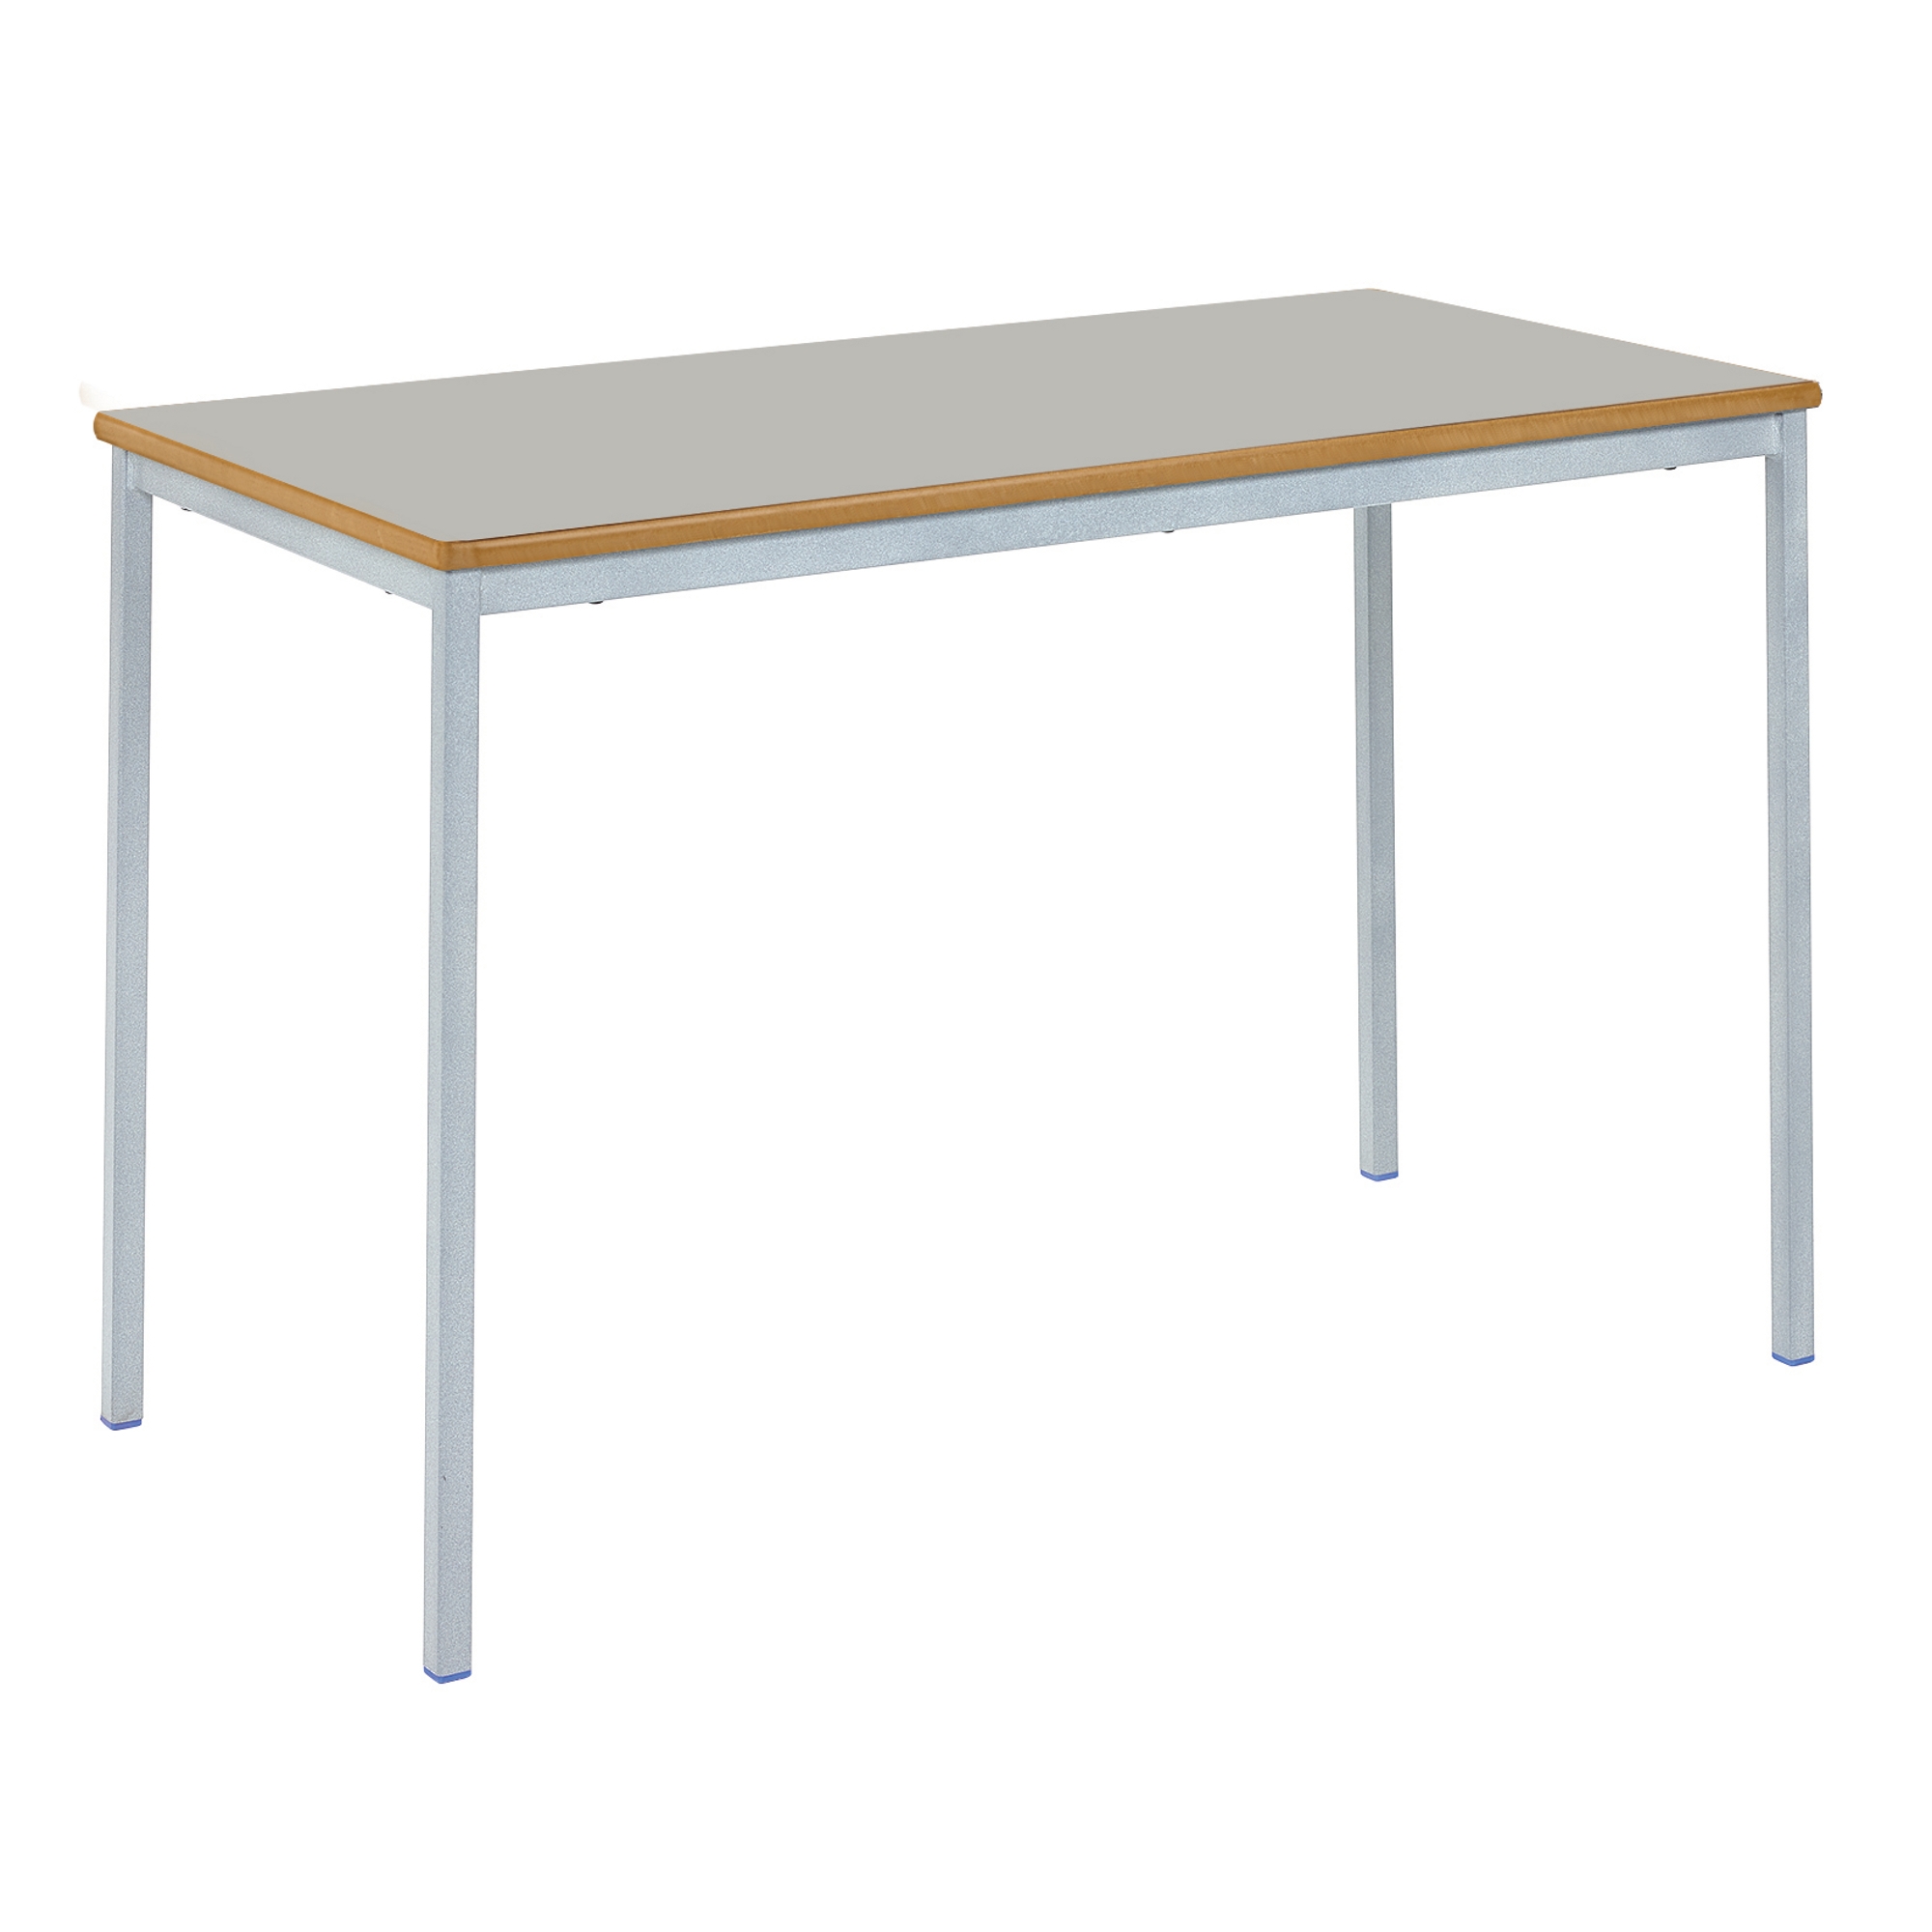 Classmates Rectangular Fully Welded Classroom Table - 1100 x 550 x 590mm - Grey